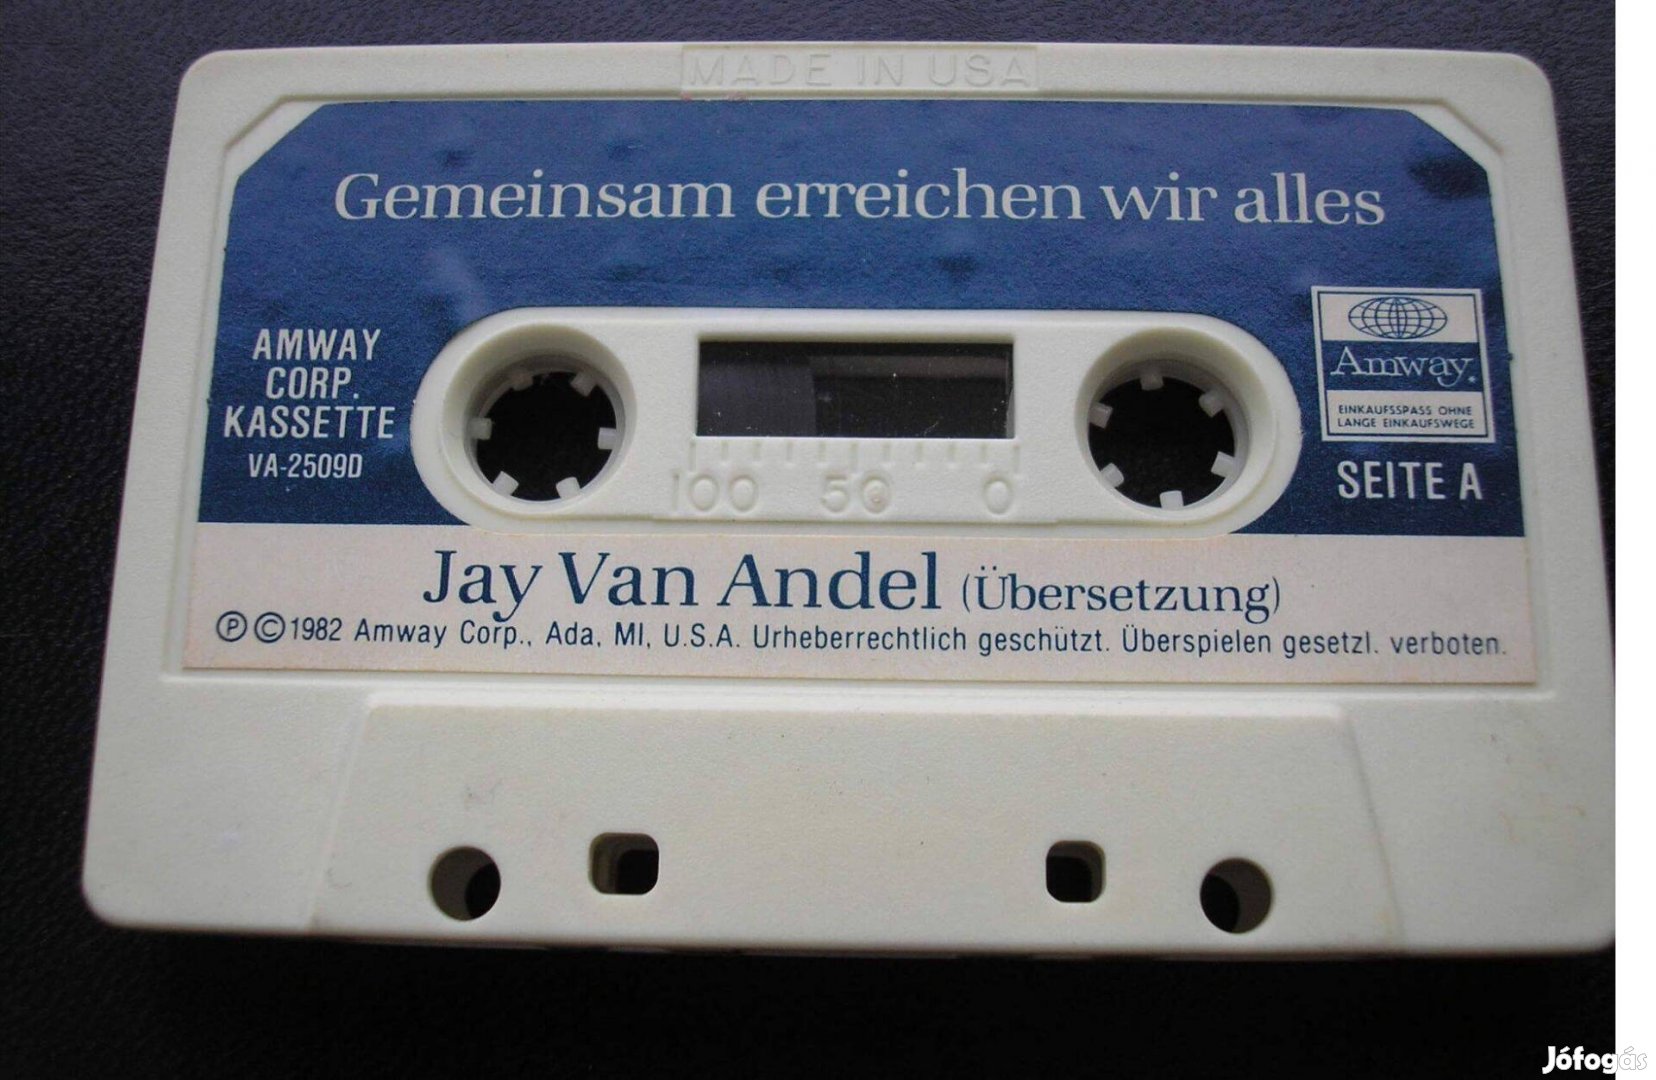 Jan Van Andel-Amway oktatási anyag ,1982 , Made In USA króm